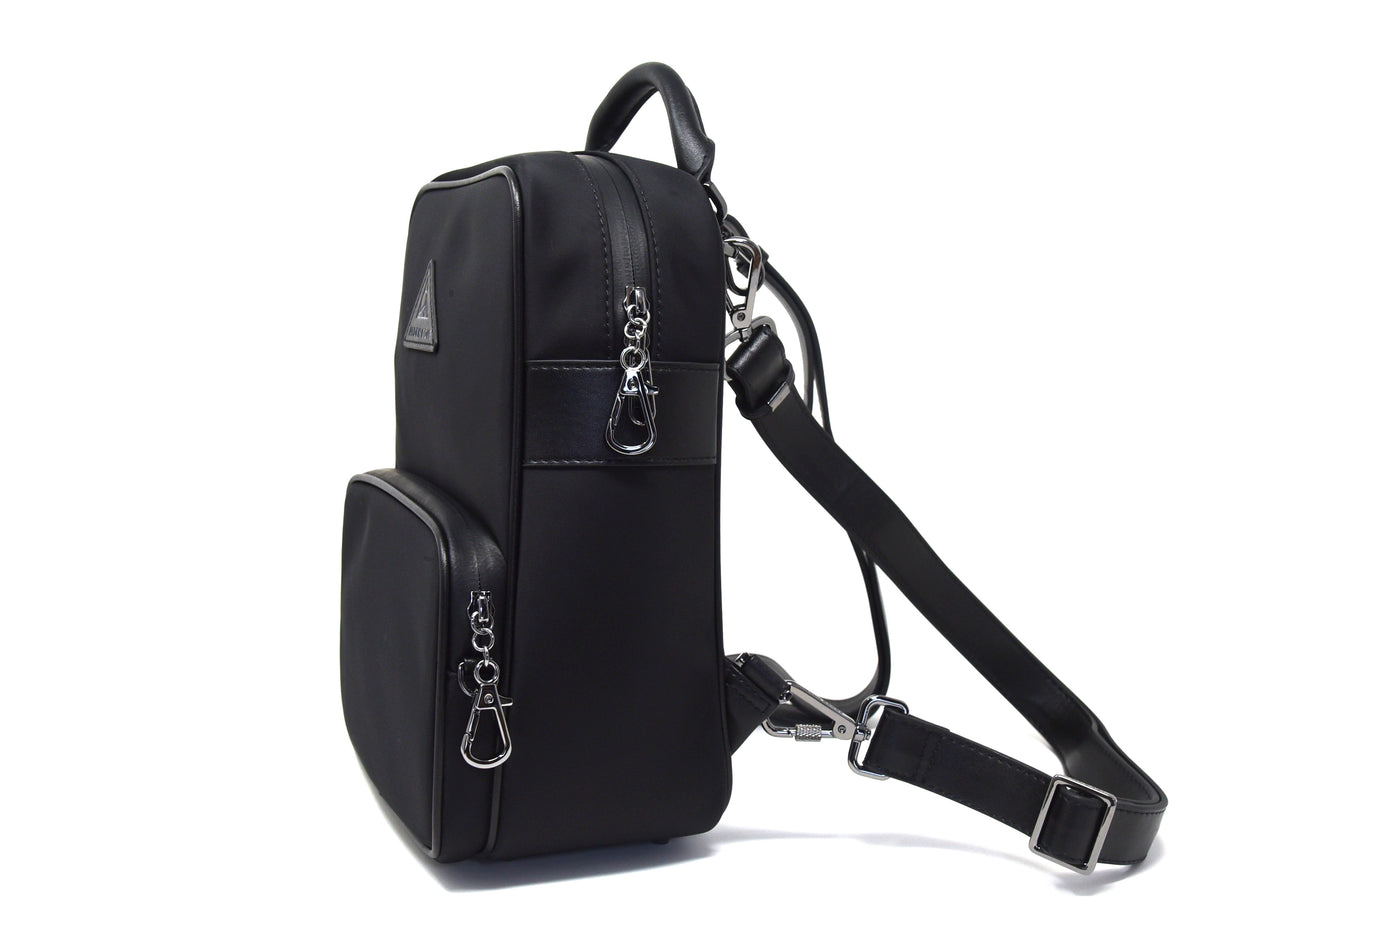 Nylon Convertible Backpack in BEIGE OR KHAKI